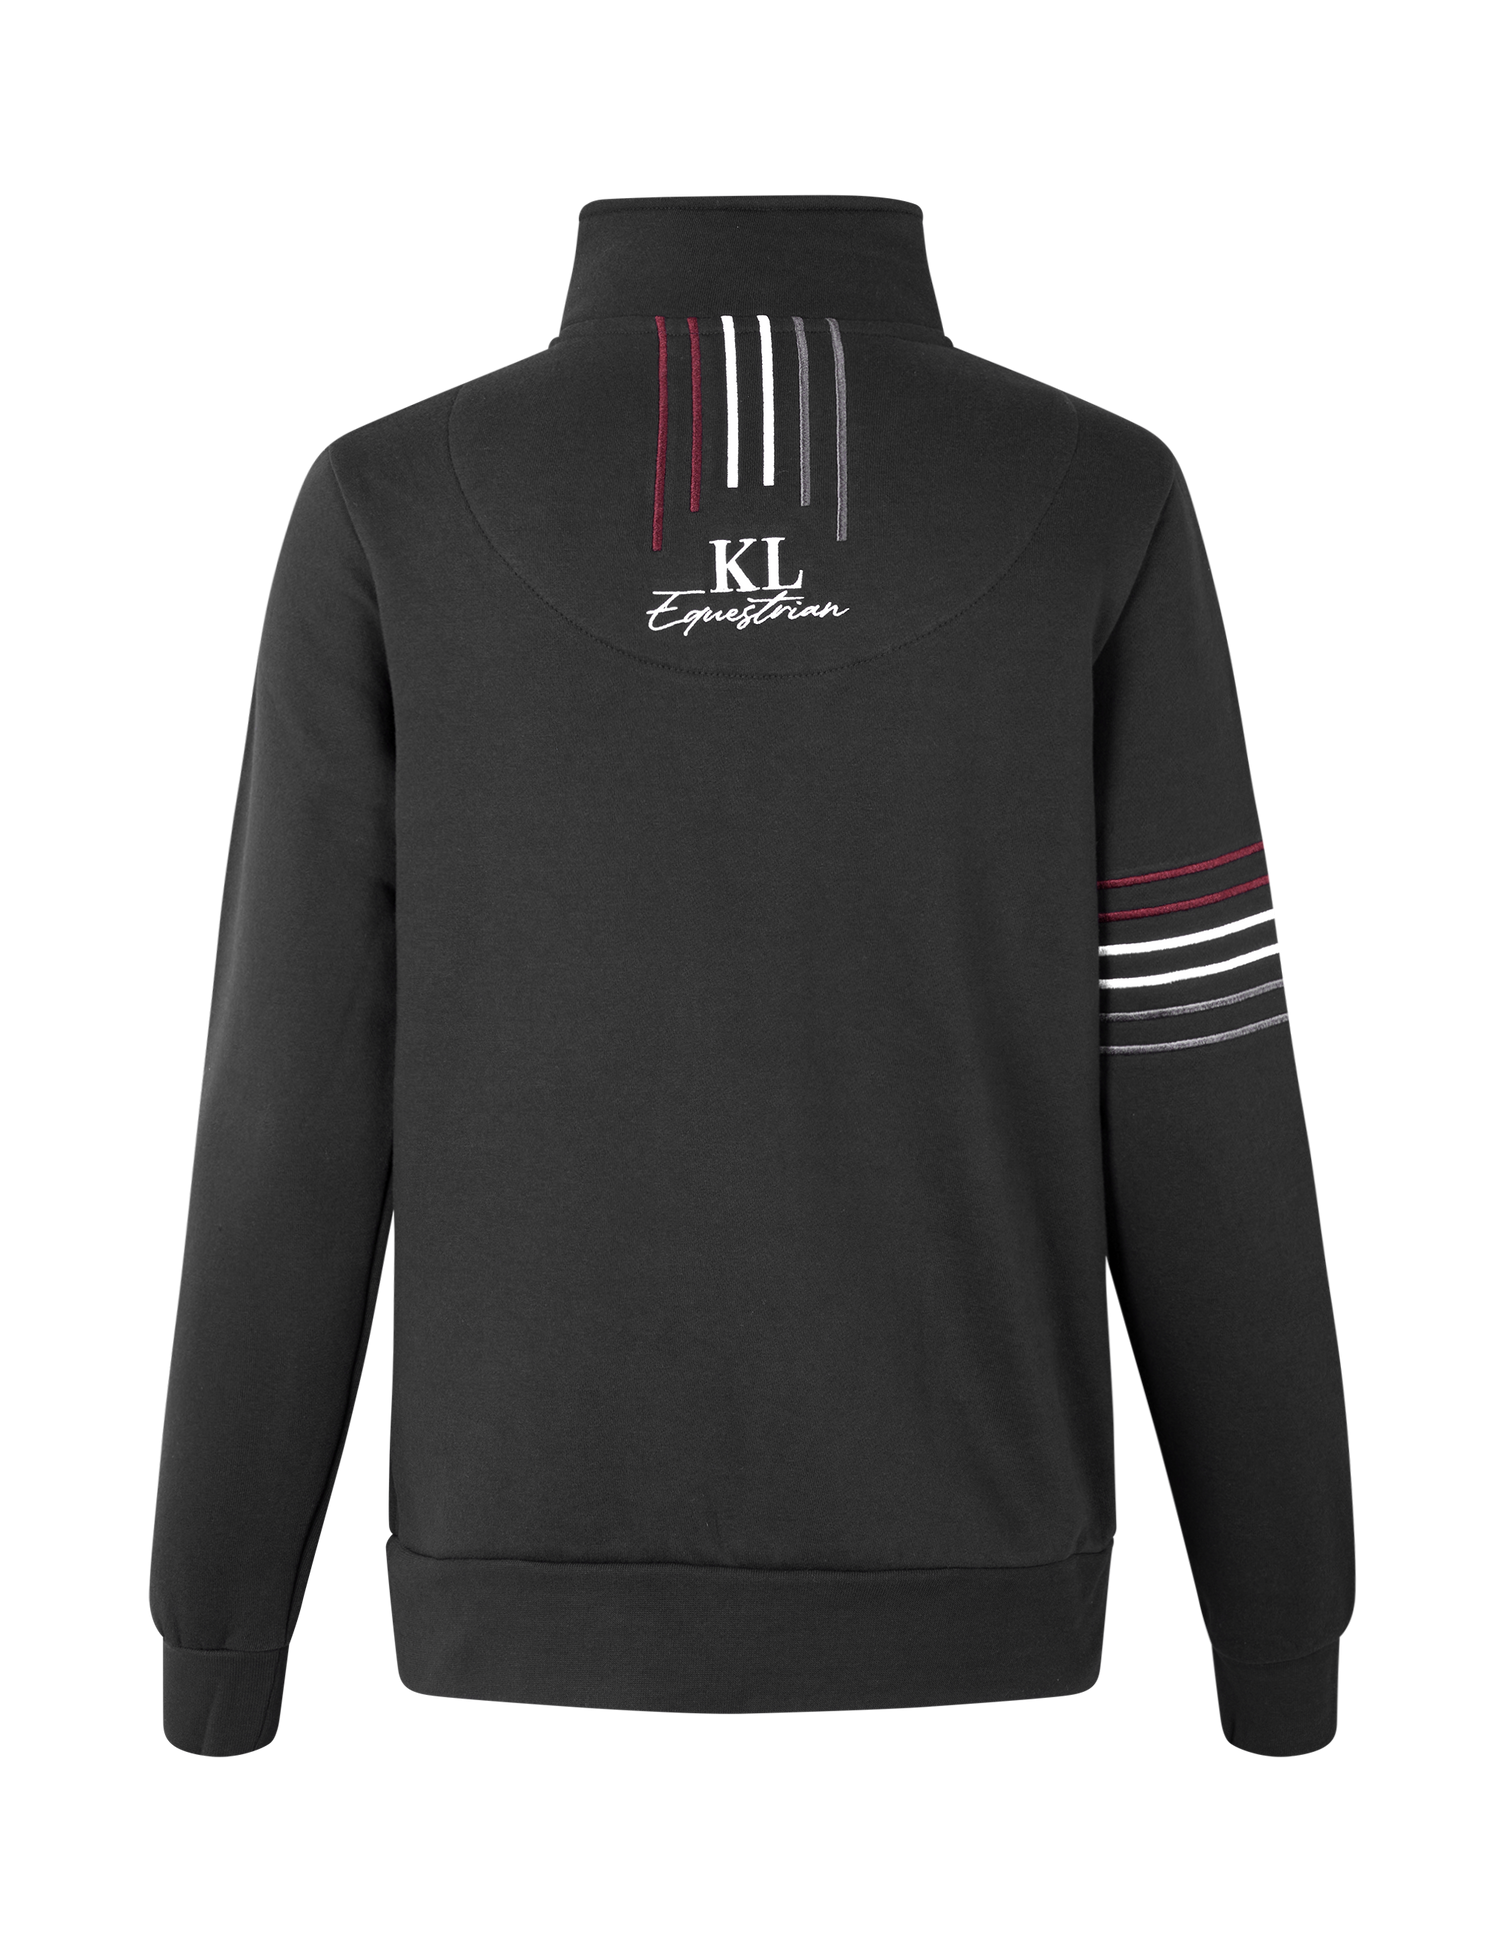 kingsland equestrian unisex sweatshirt